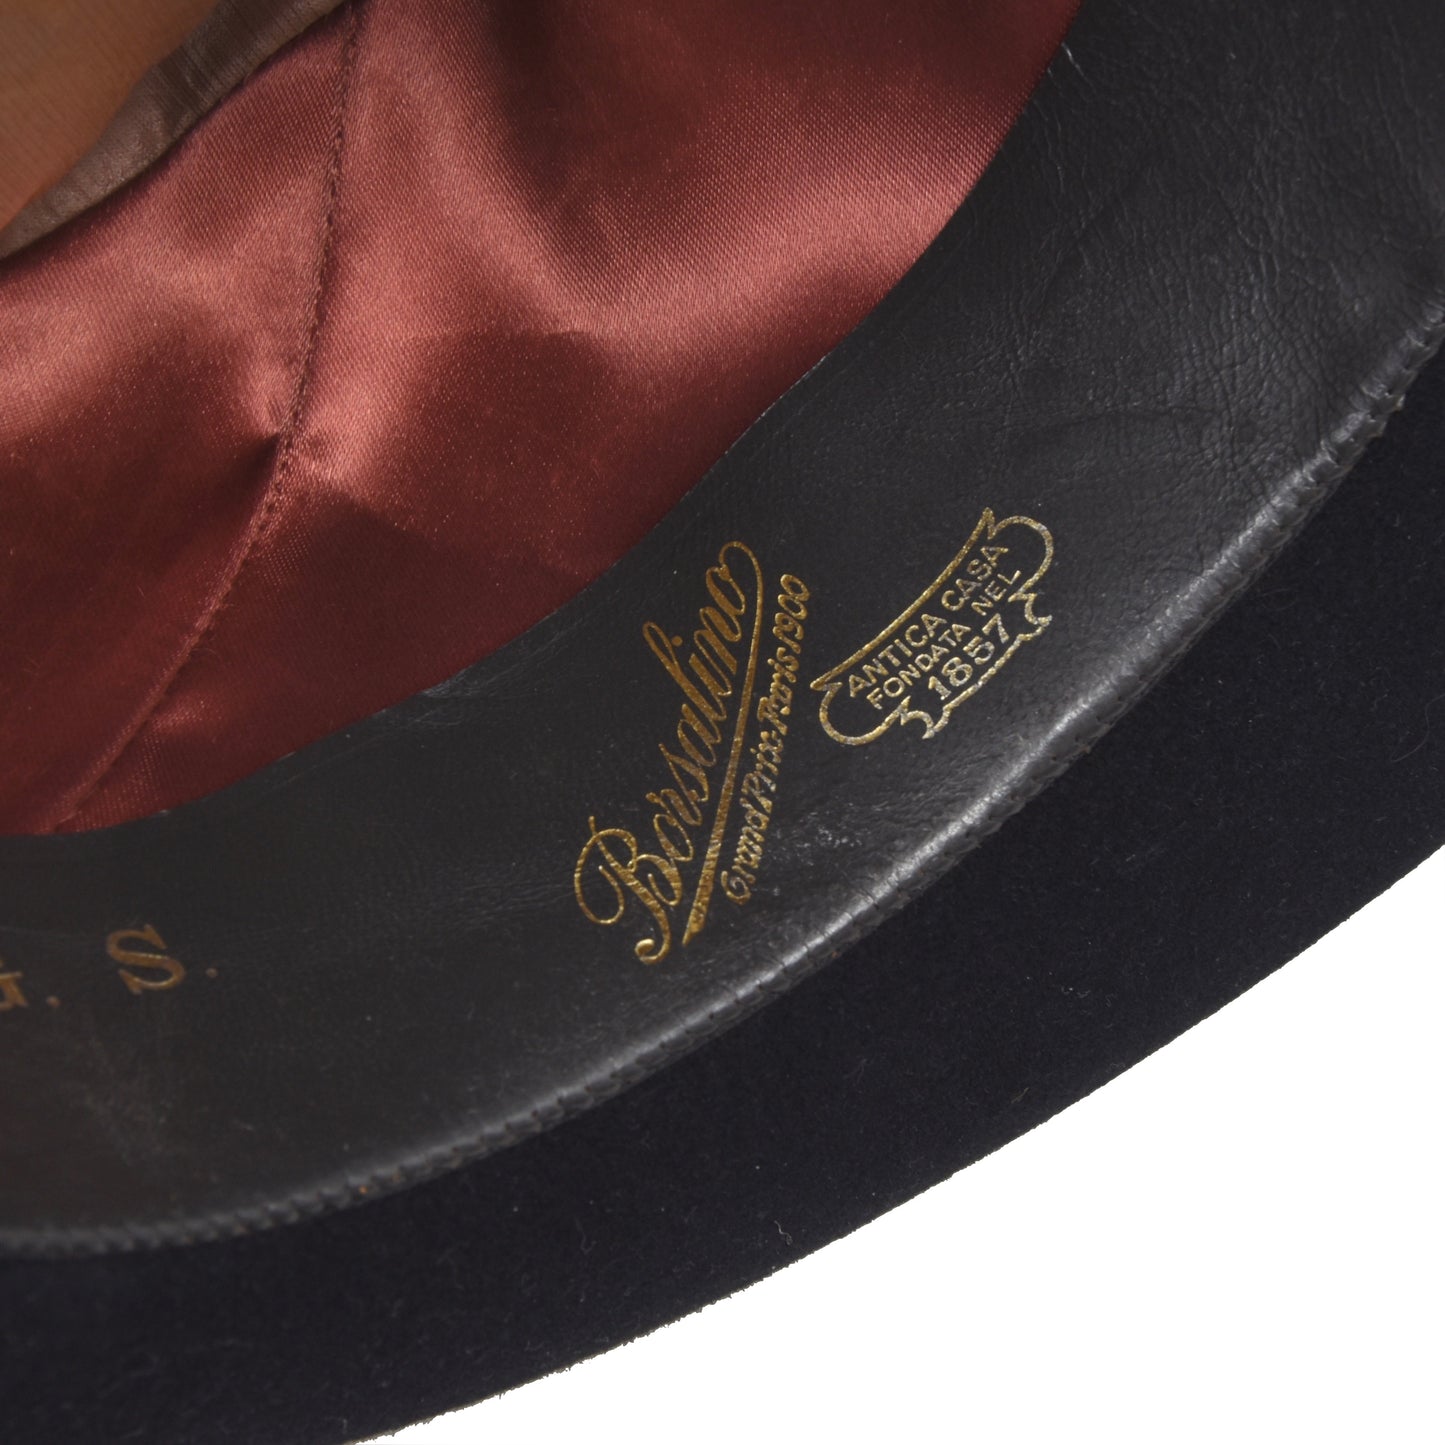 Vintage Borsalino Felt Hat 6cm Brim Size 56 - Buio